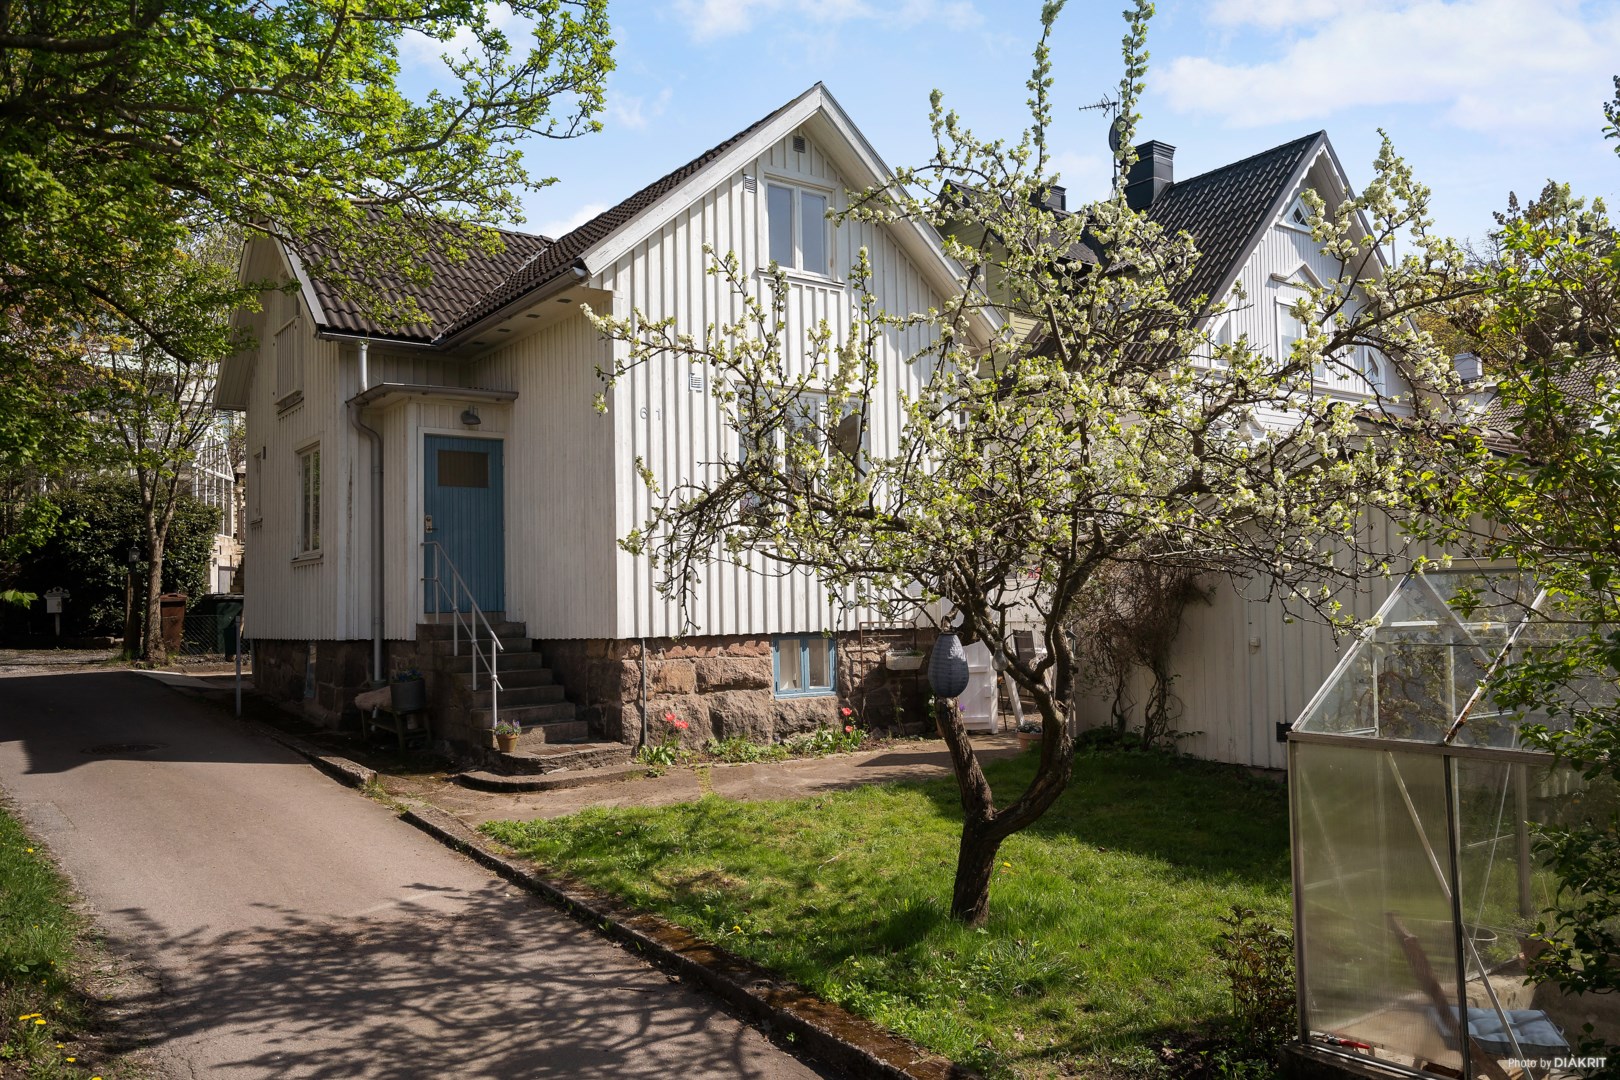 Villa i Ekebäck, Västra Frölunda, Sverige, Ekehöjdsgatan 61